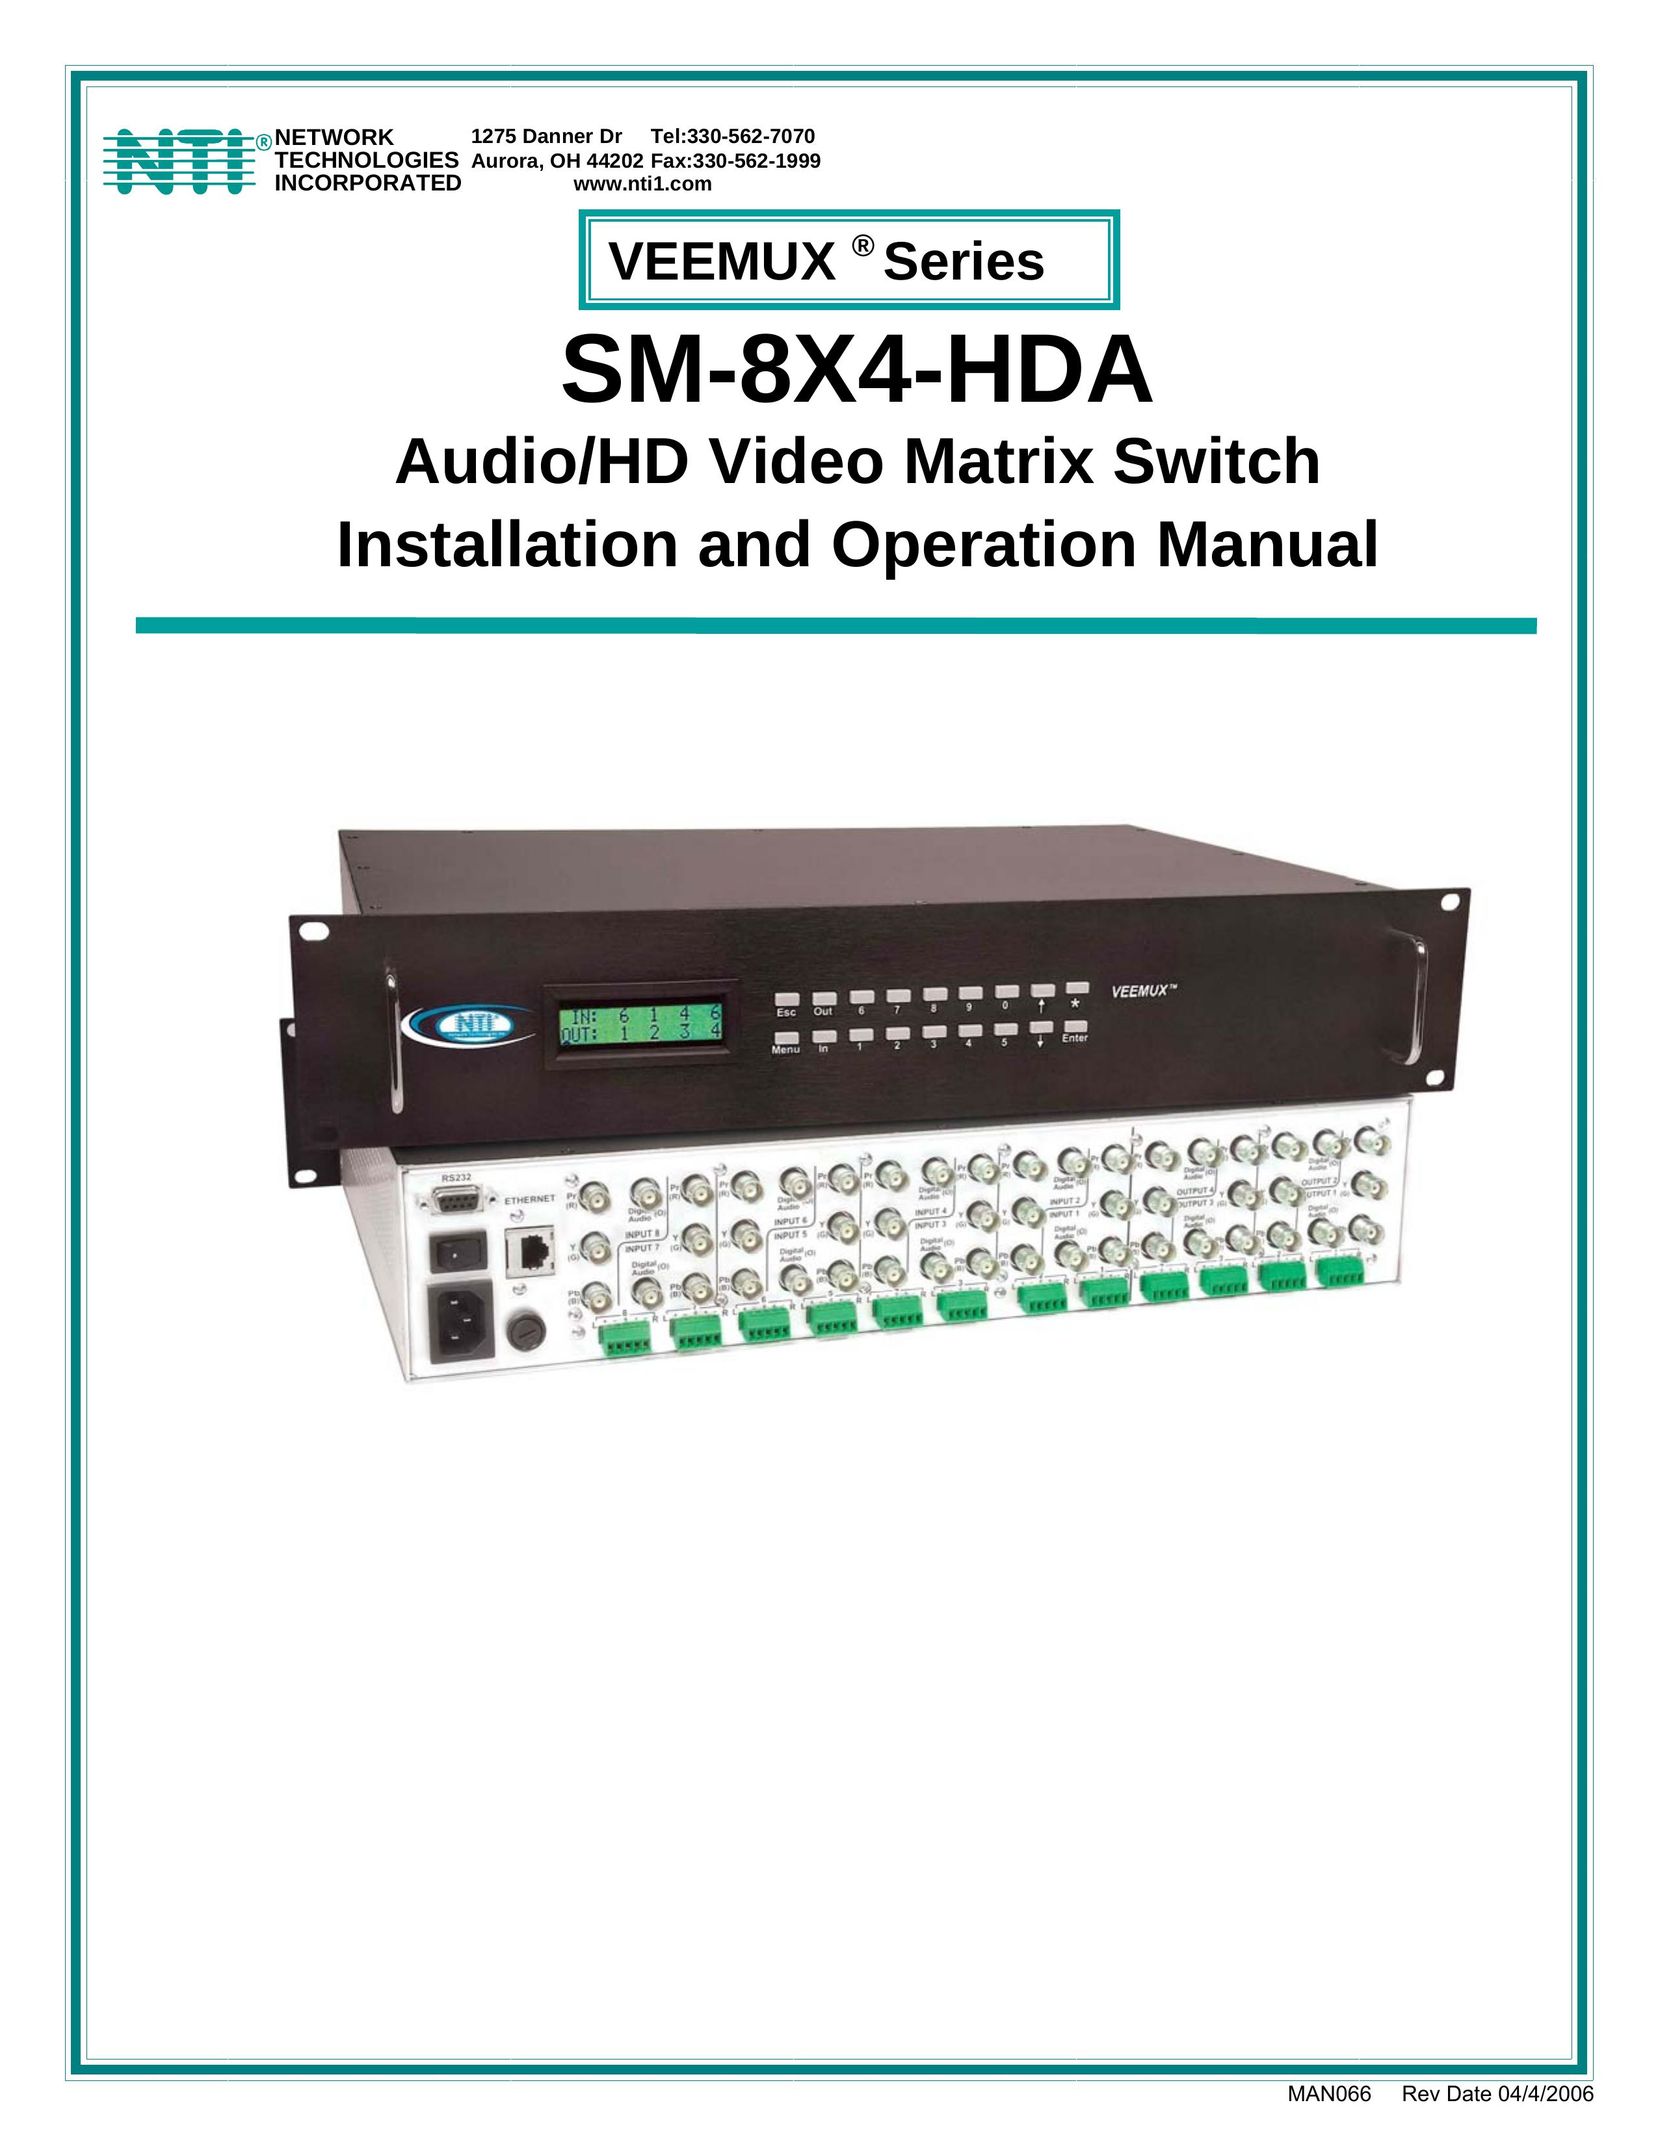 Network Technologies SM-8X4-HDA Switch User Manual